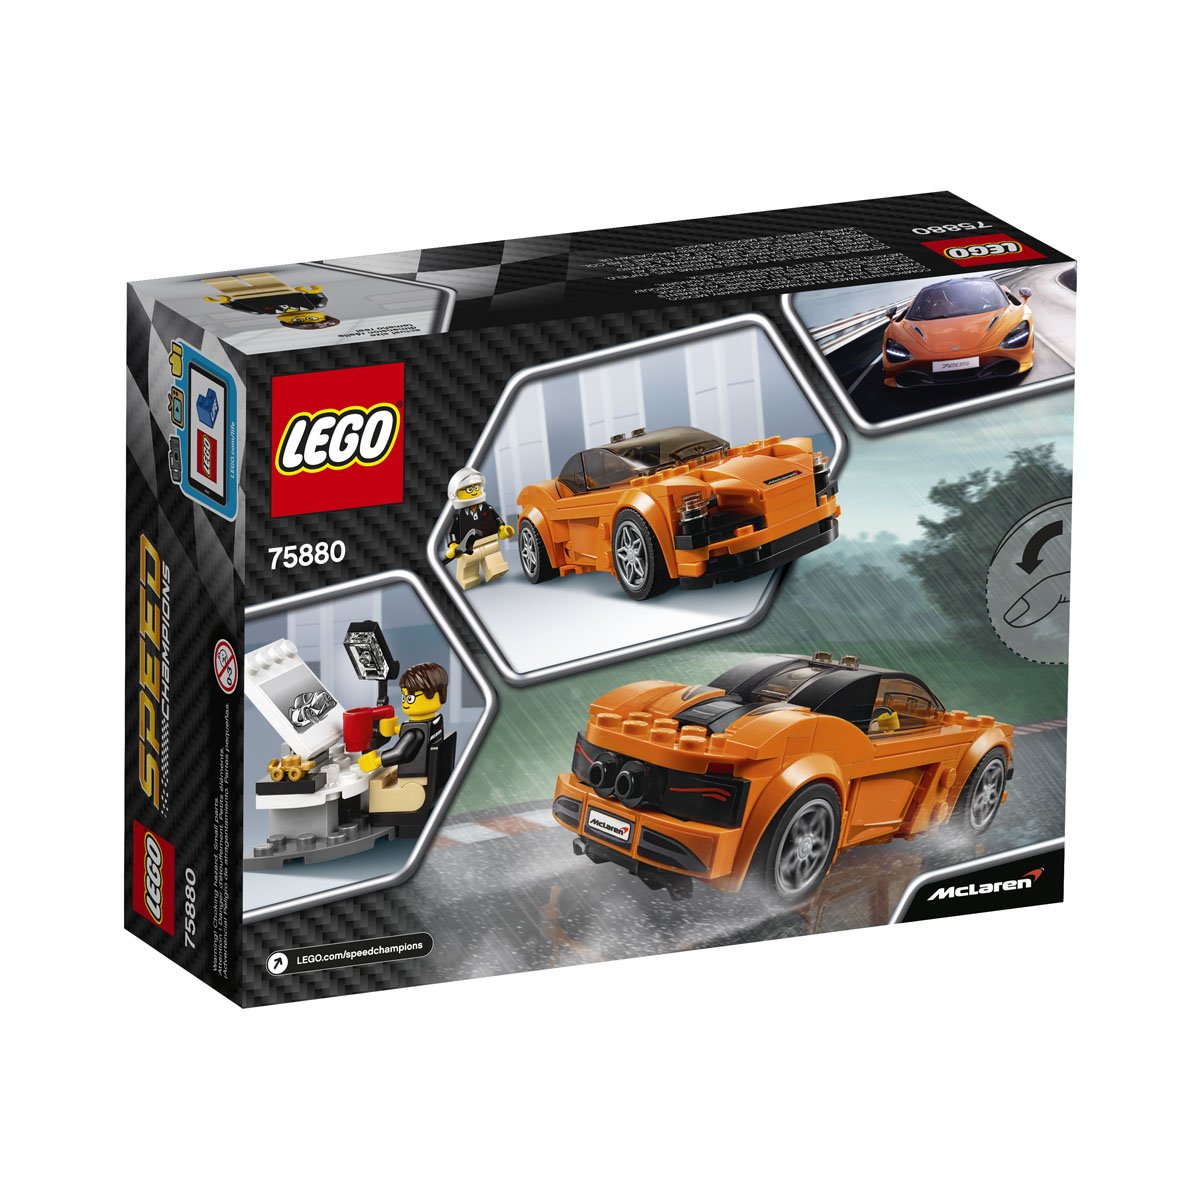 Speed Champions Mclaren Lego